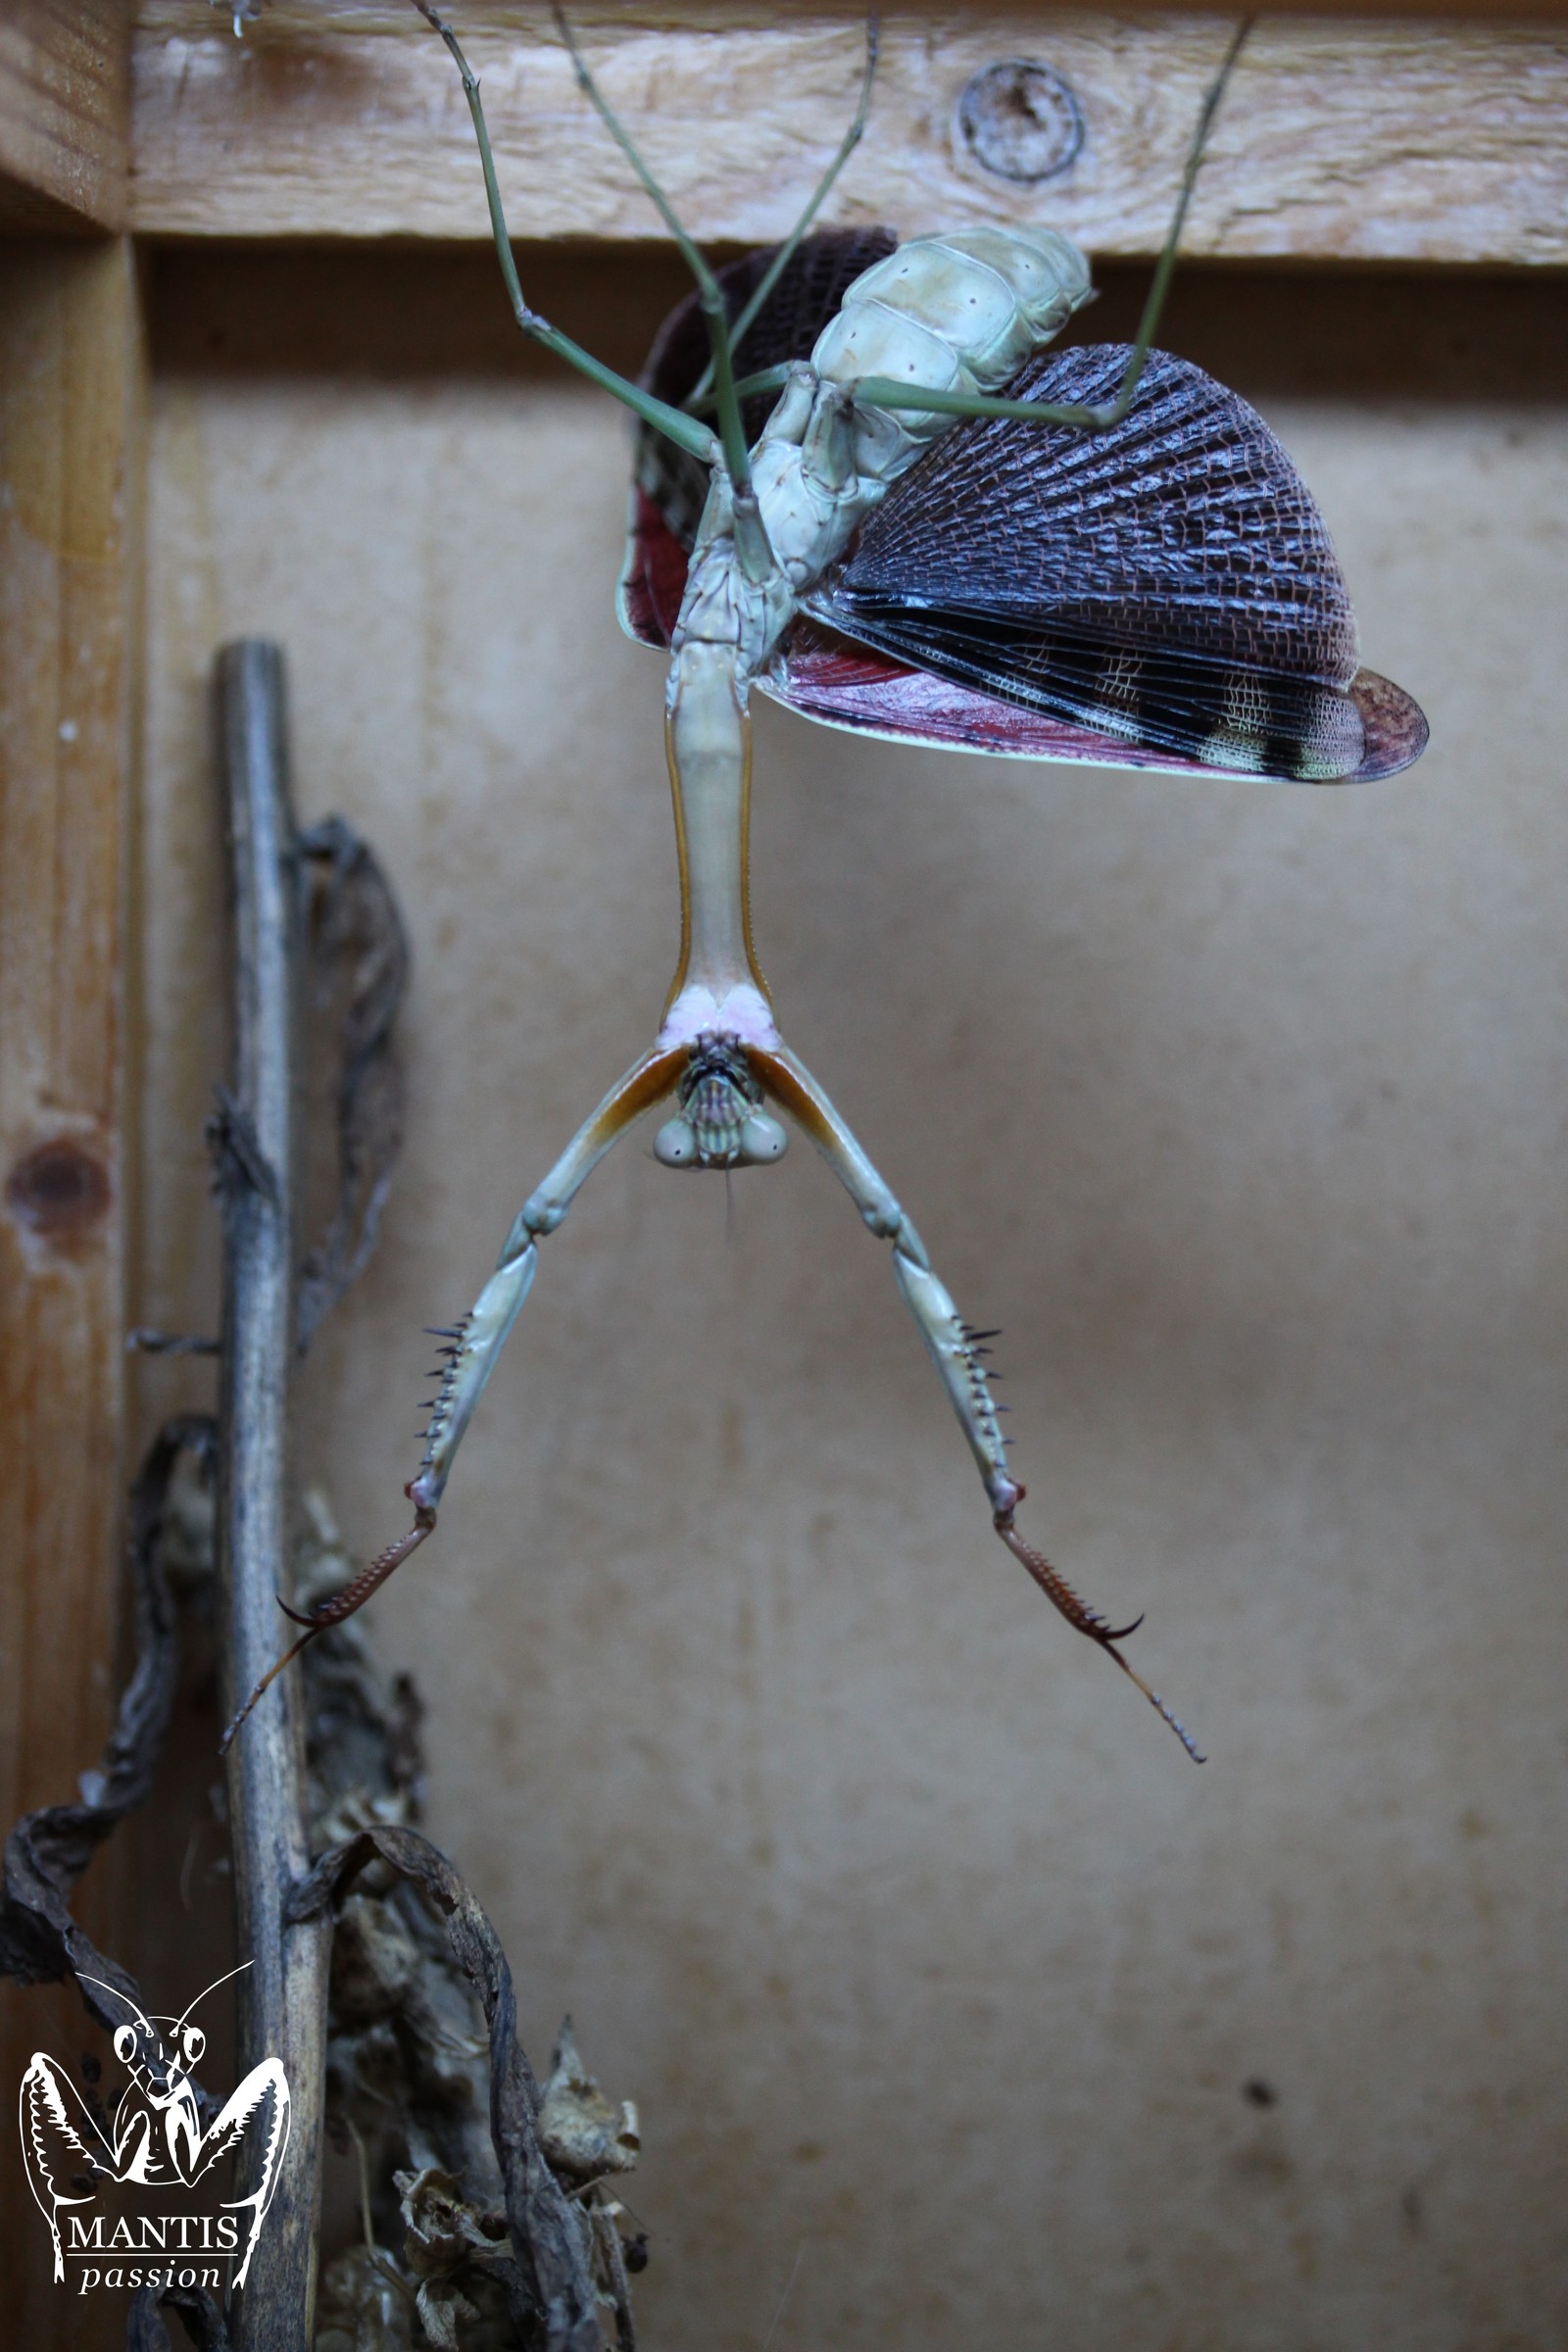 Plistospilota guineensis femelle adulte en posture d'intimidation